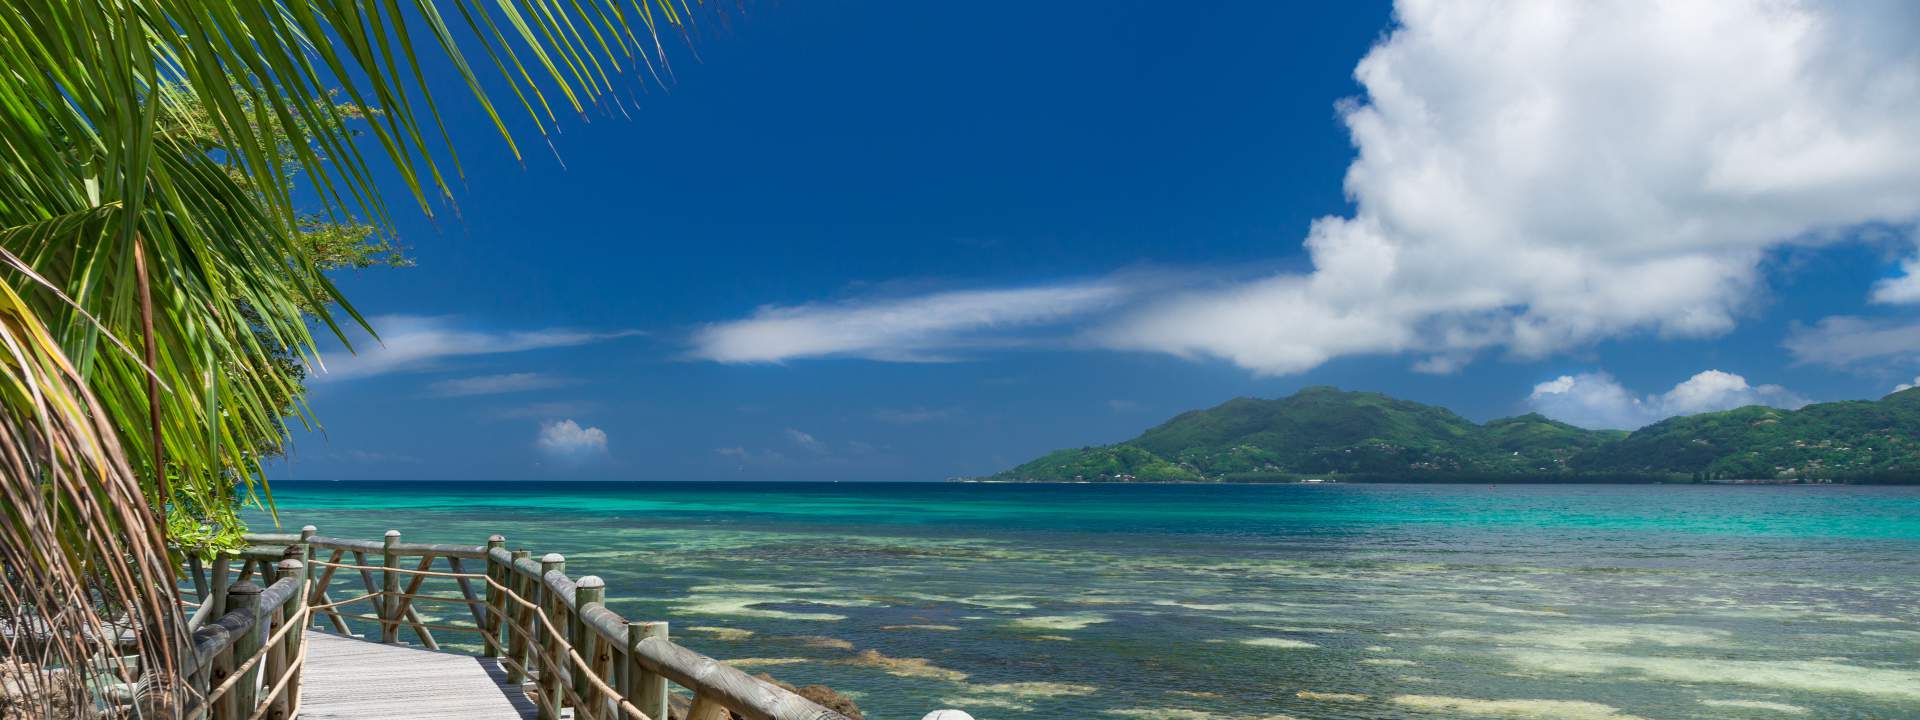 Мини-круиз по Сейшельским островам на катамаране